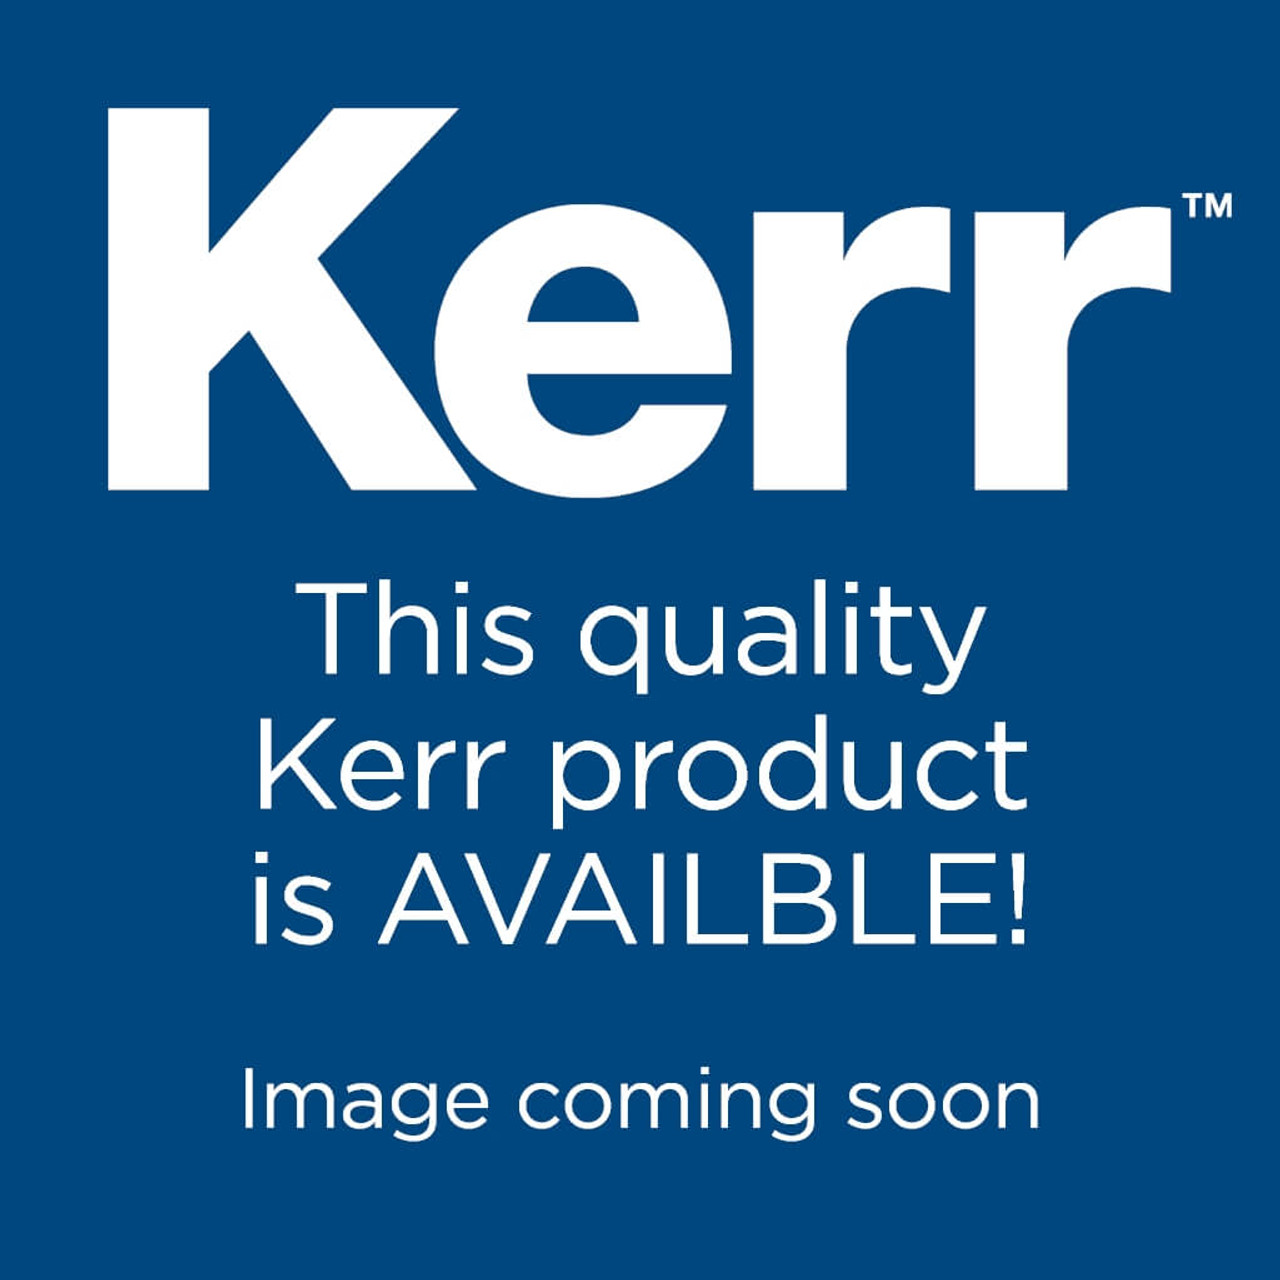 AXIS Green CeraGlaze - FG, P355-3, Kerr Dental